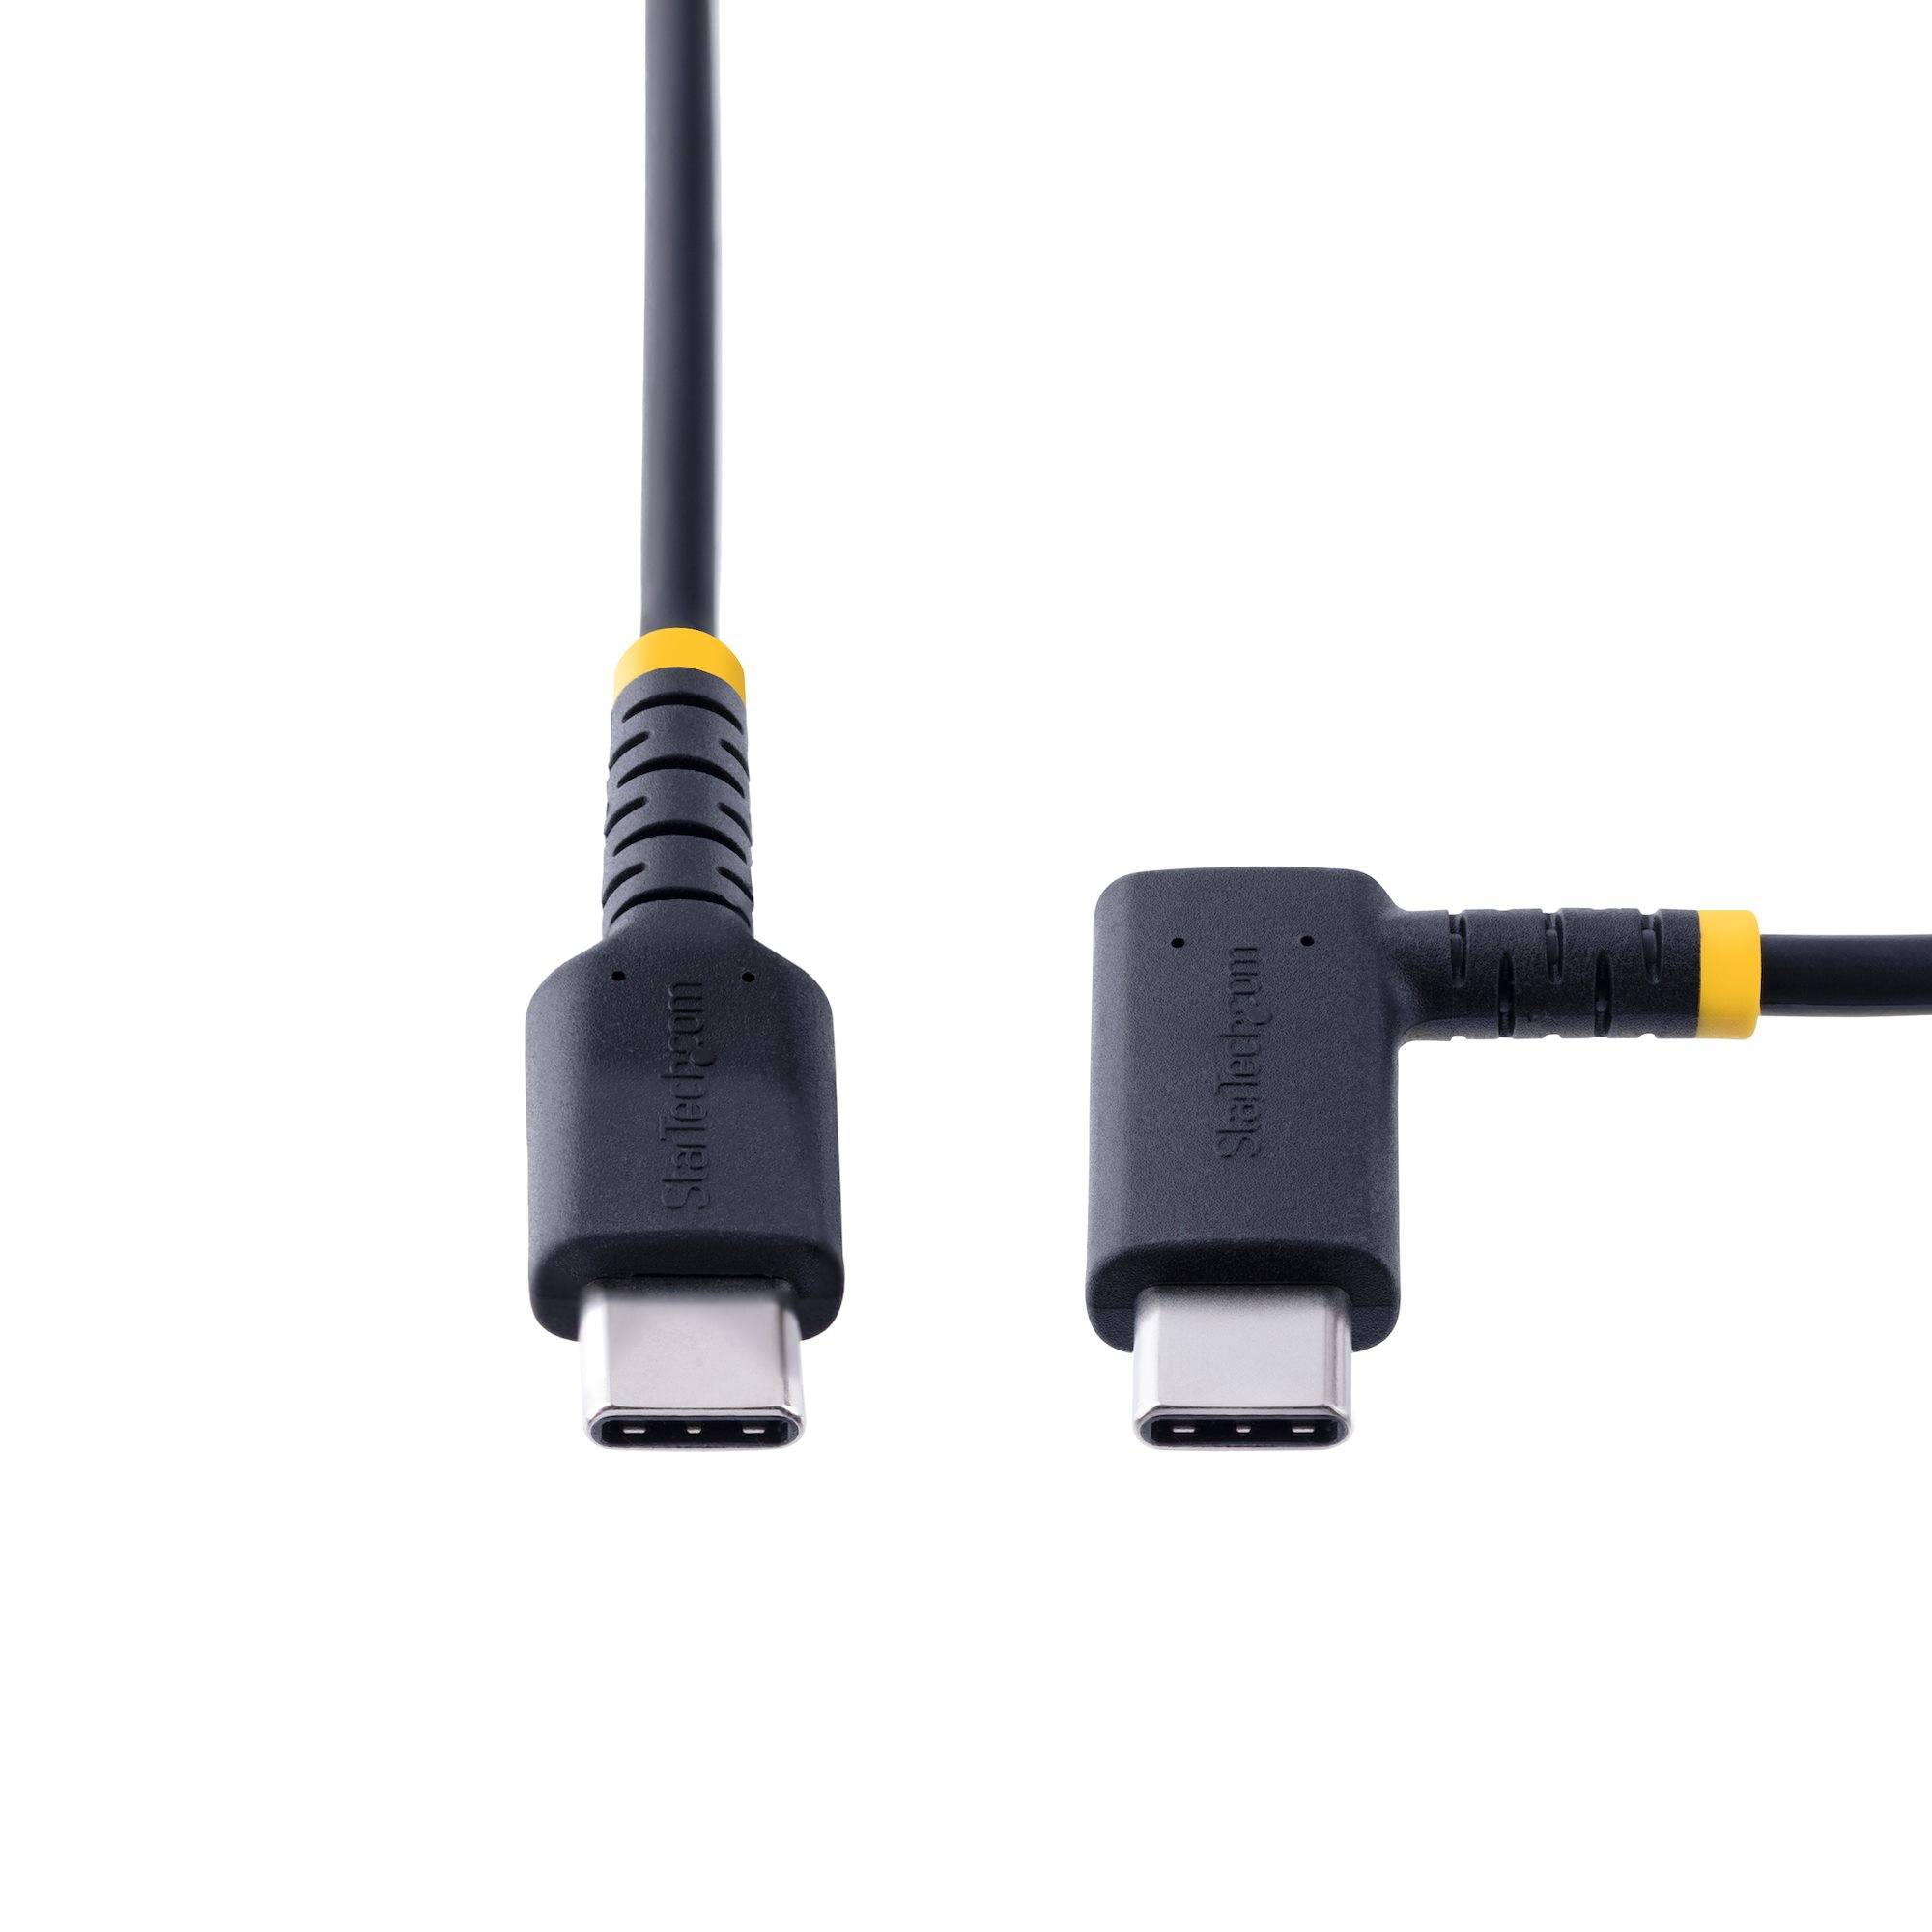 Rca Informatique - image du produit : 15CM USB-C CHARGING CABLE FAST CHARGE - RIGHT ANGLE USBC CABLE